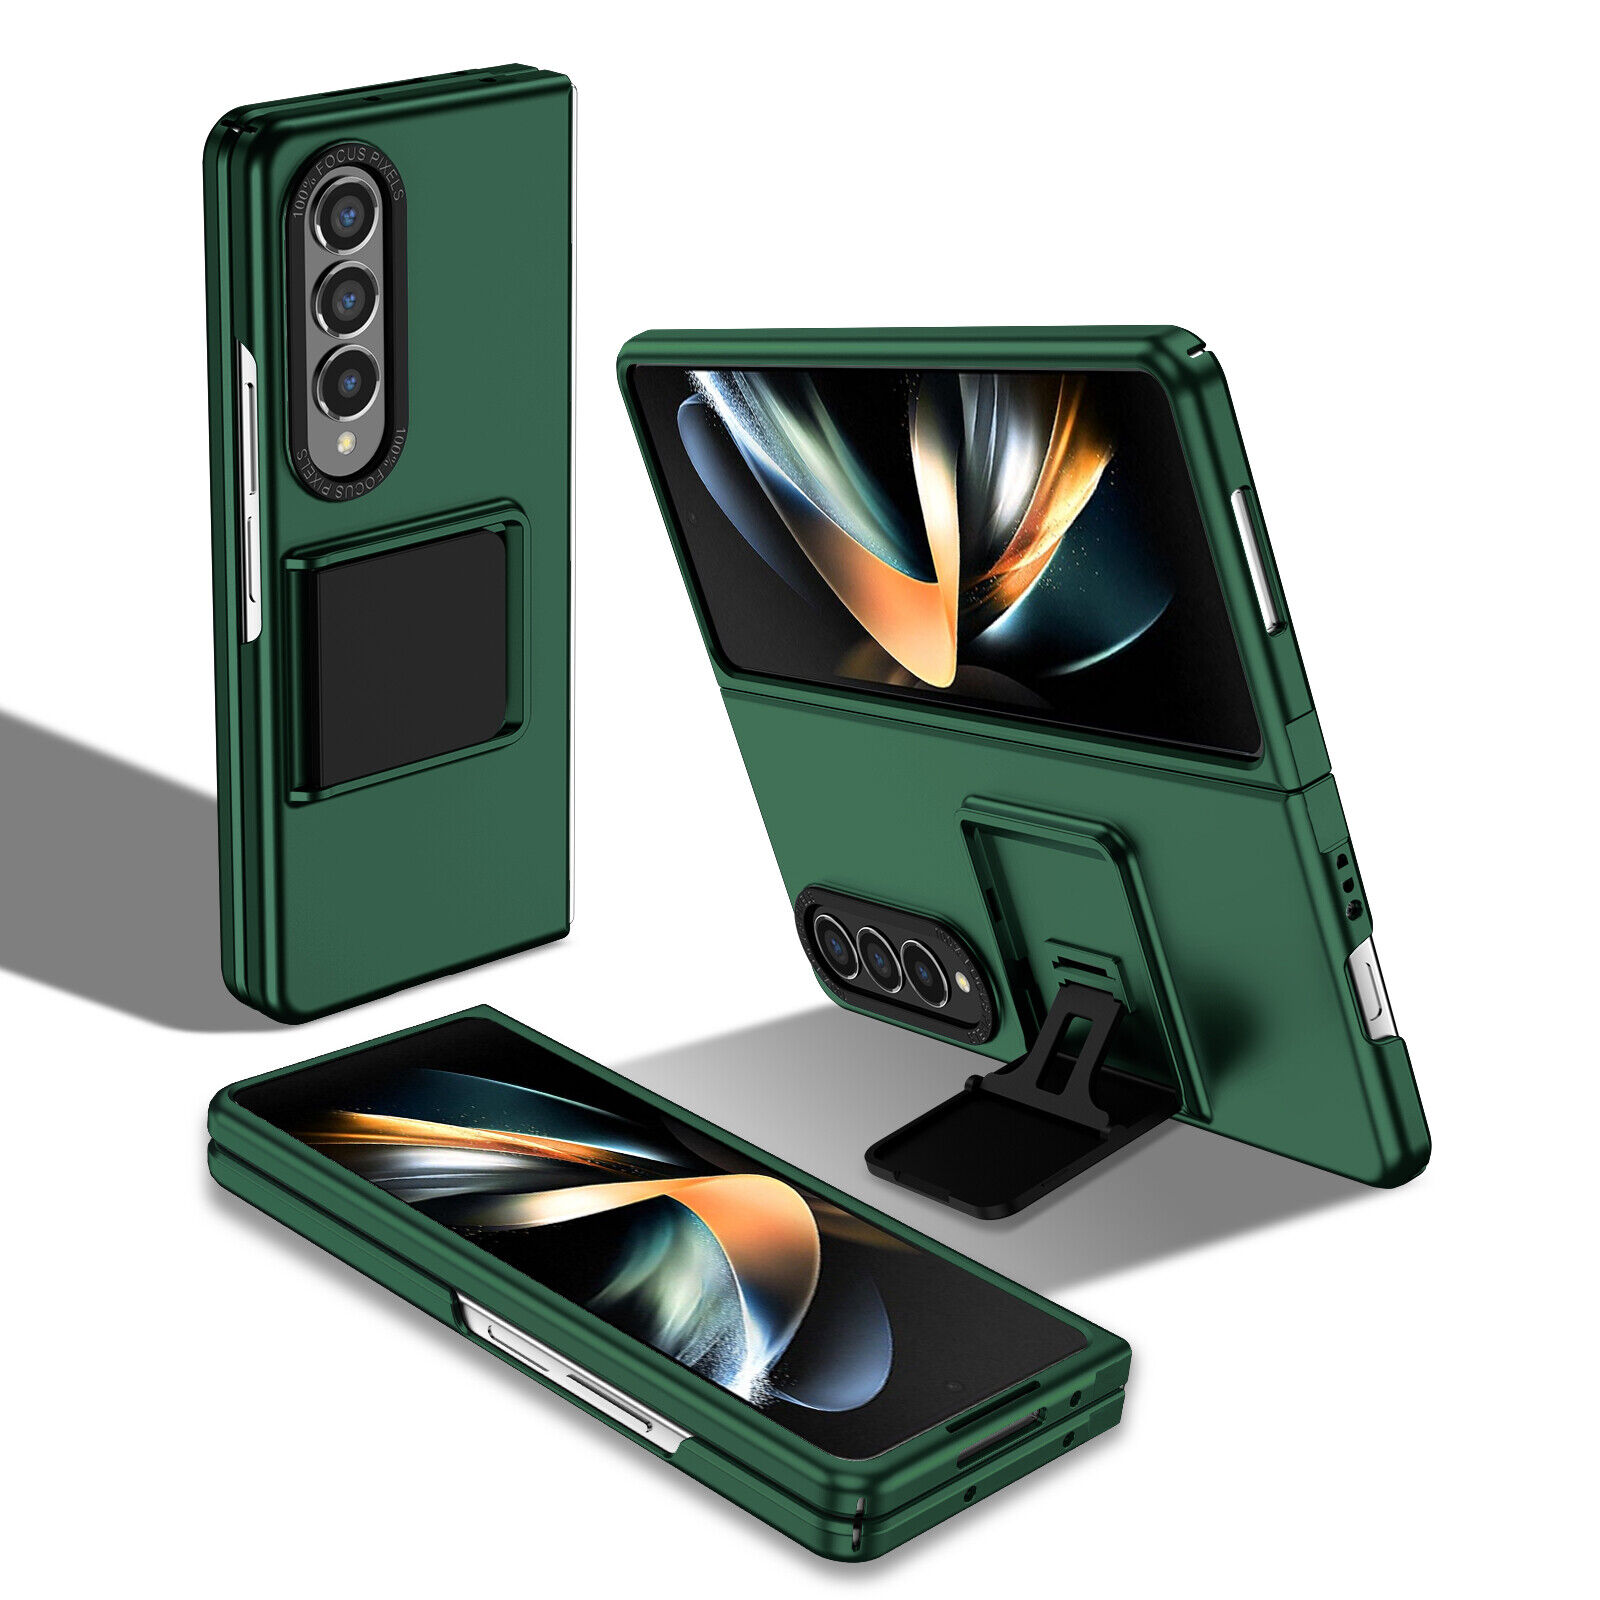 Samsung Galaxy Z Fold 4 Fold 3 5G Shockproof Case Slim Fold Stand Hard Cover Grean